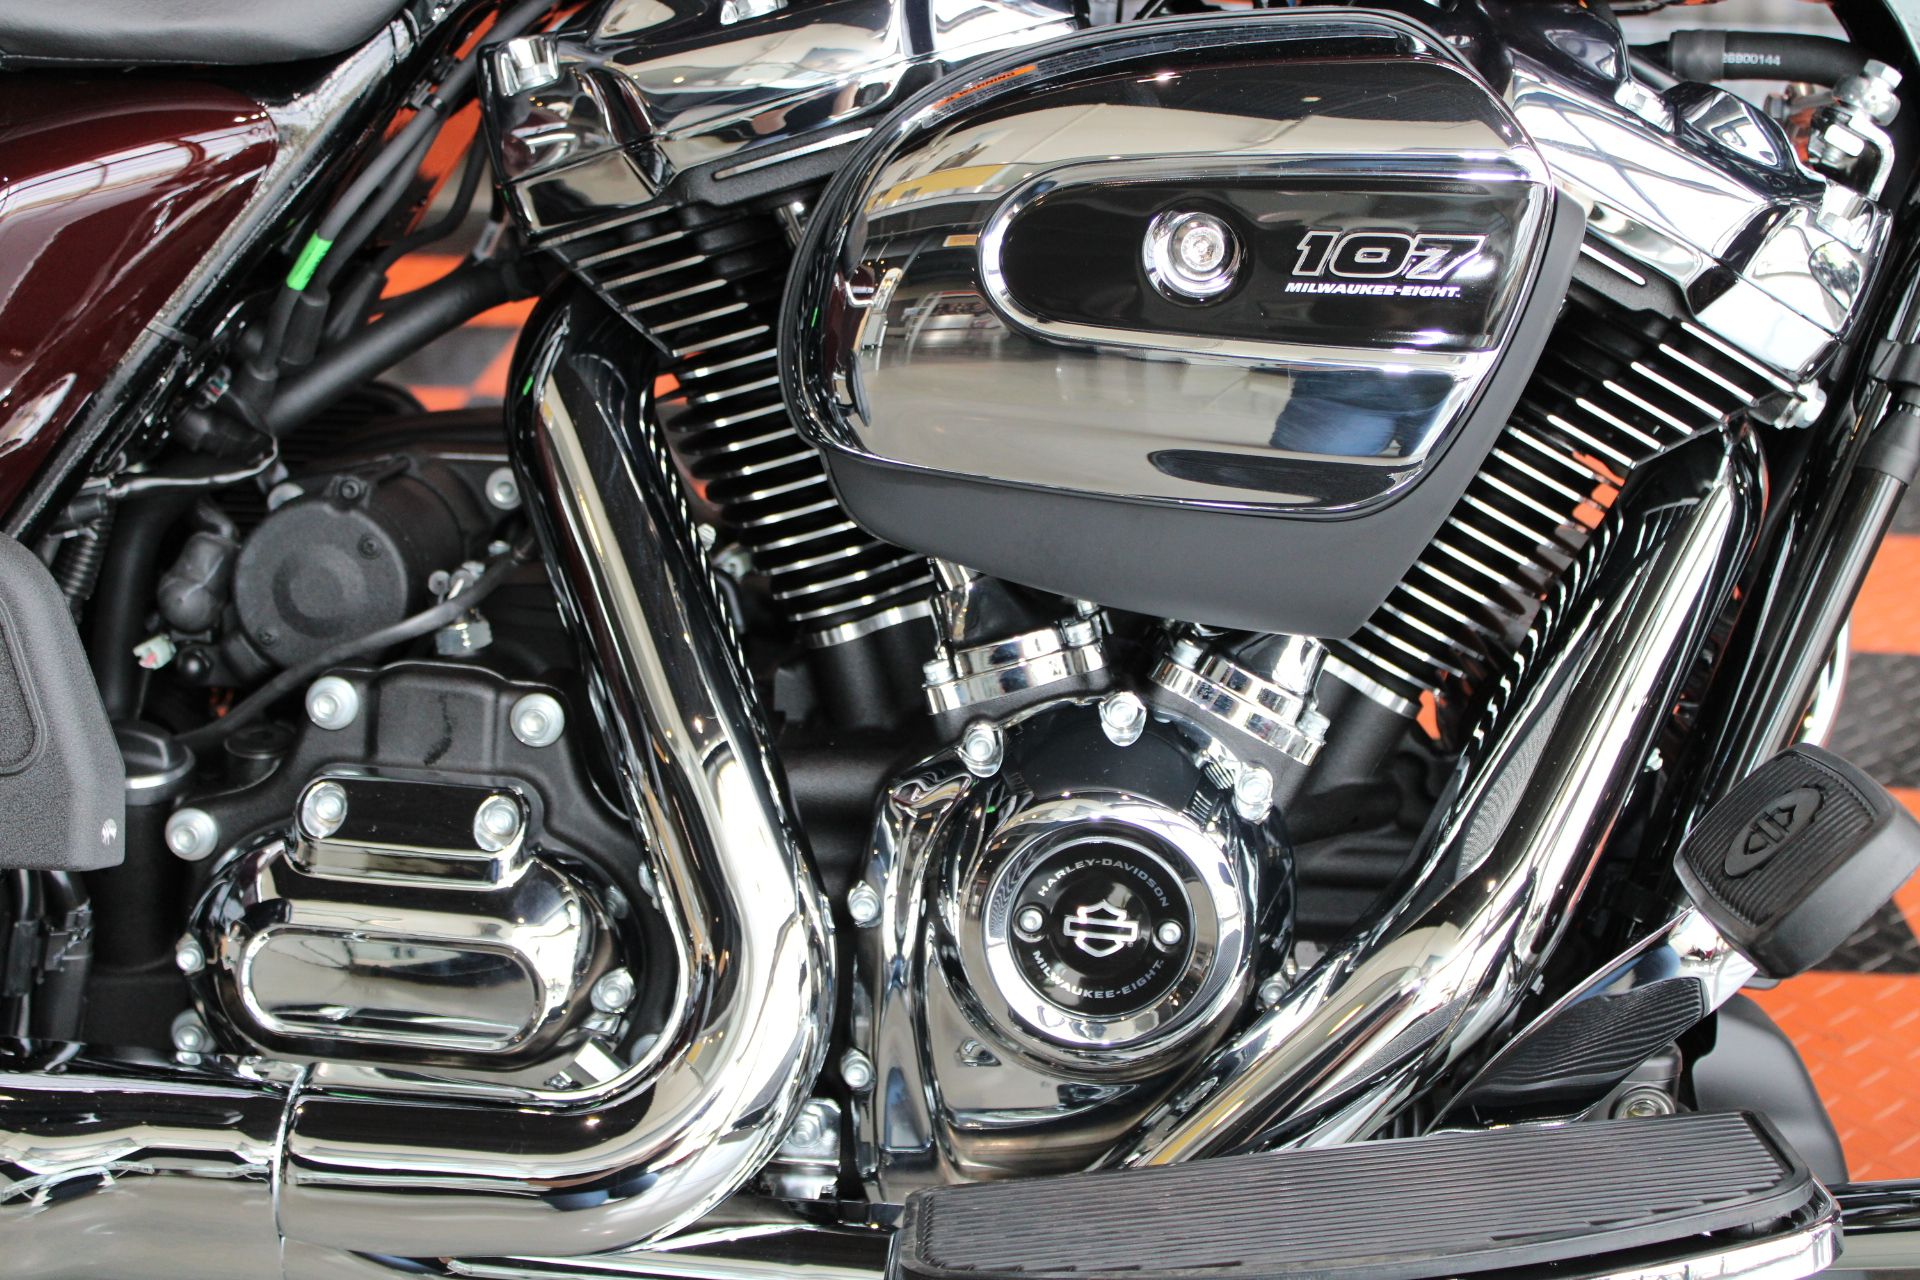 2022 Harley-Davidson Road King® in Shorewood, Illinois - Photo 5